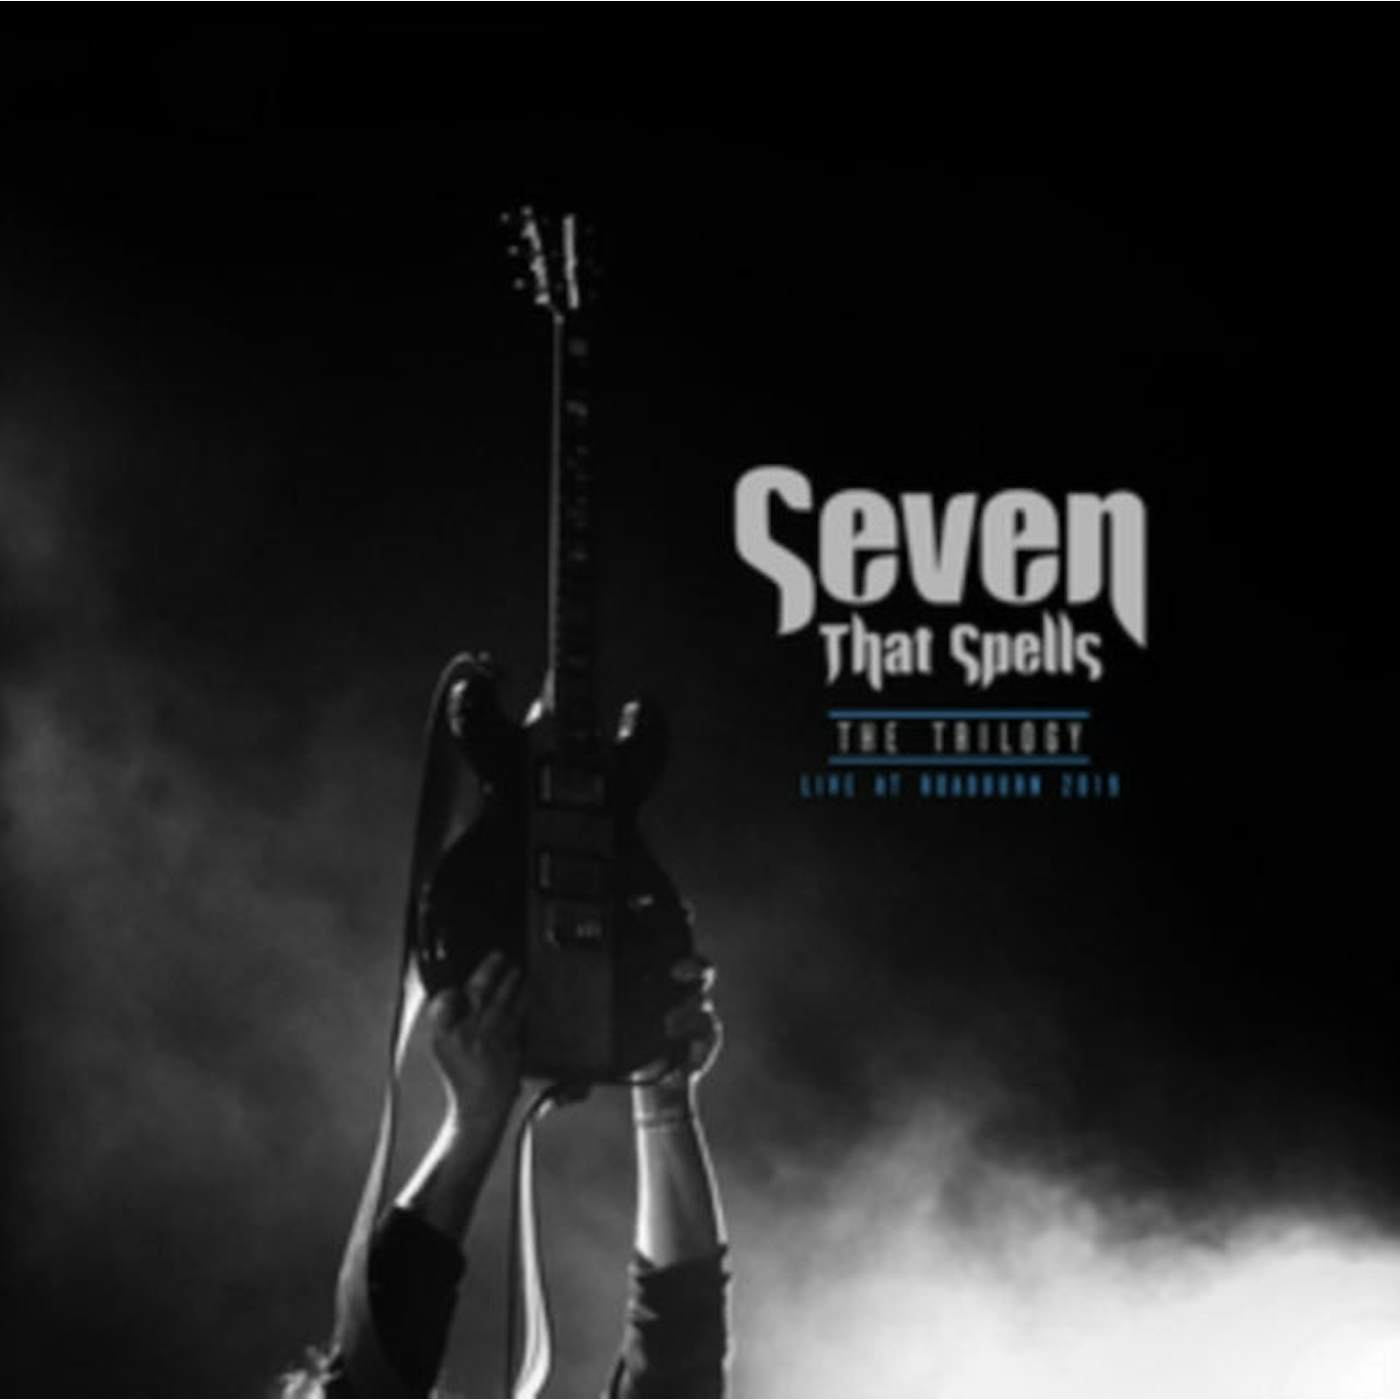 Seven That Spells LP - The Trilogy (Live At Roadburn 2019) (Vinyl)